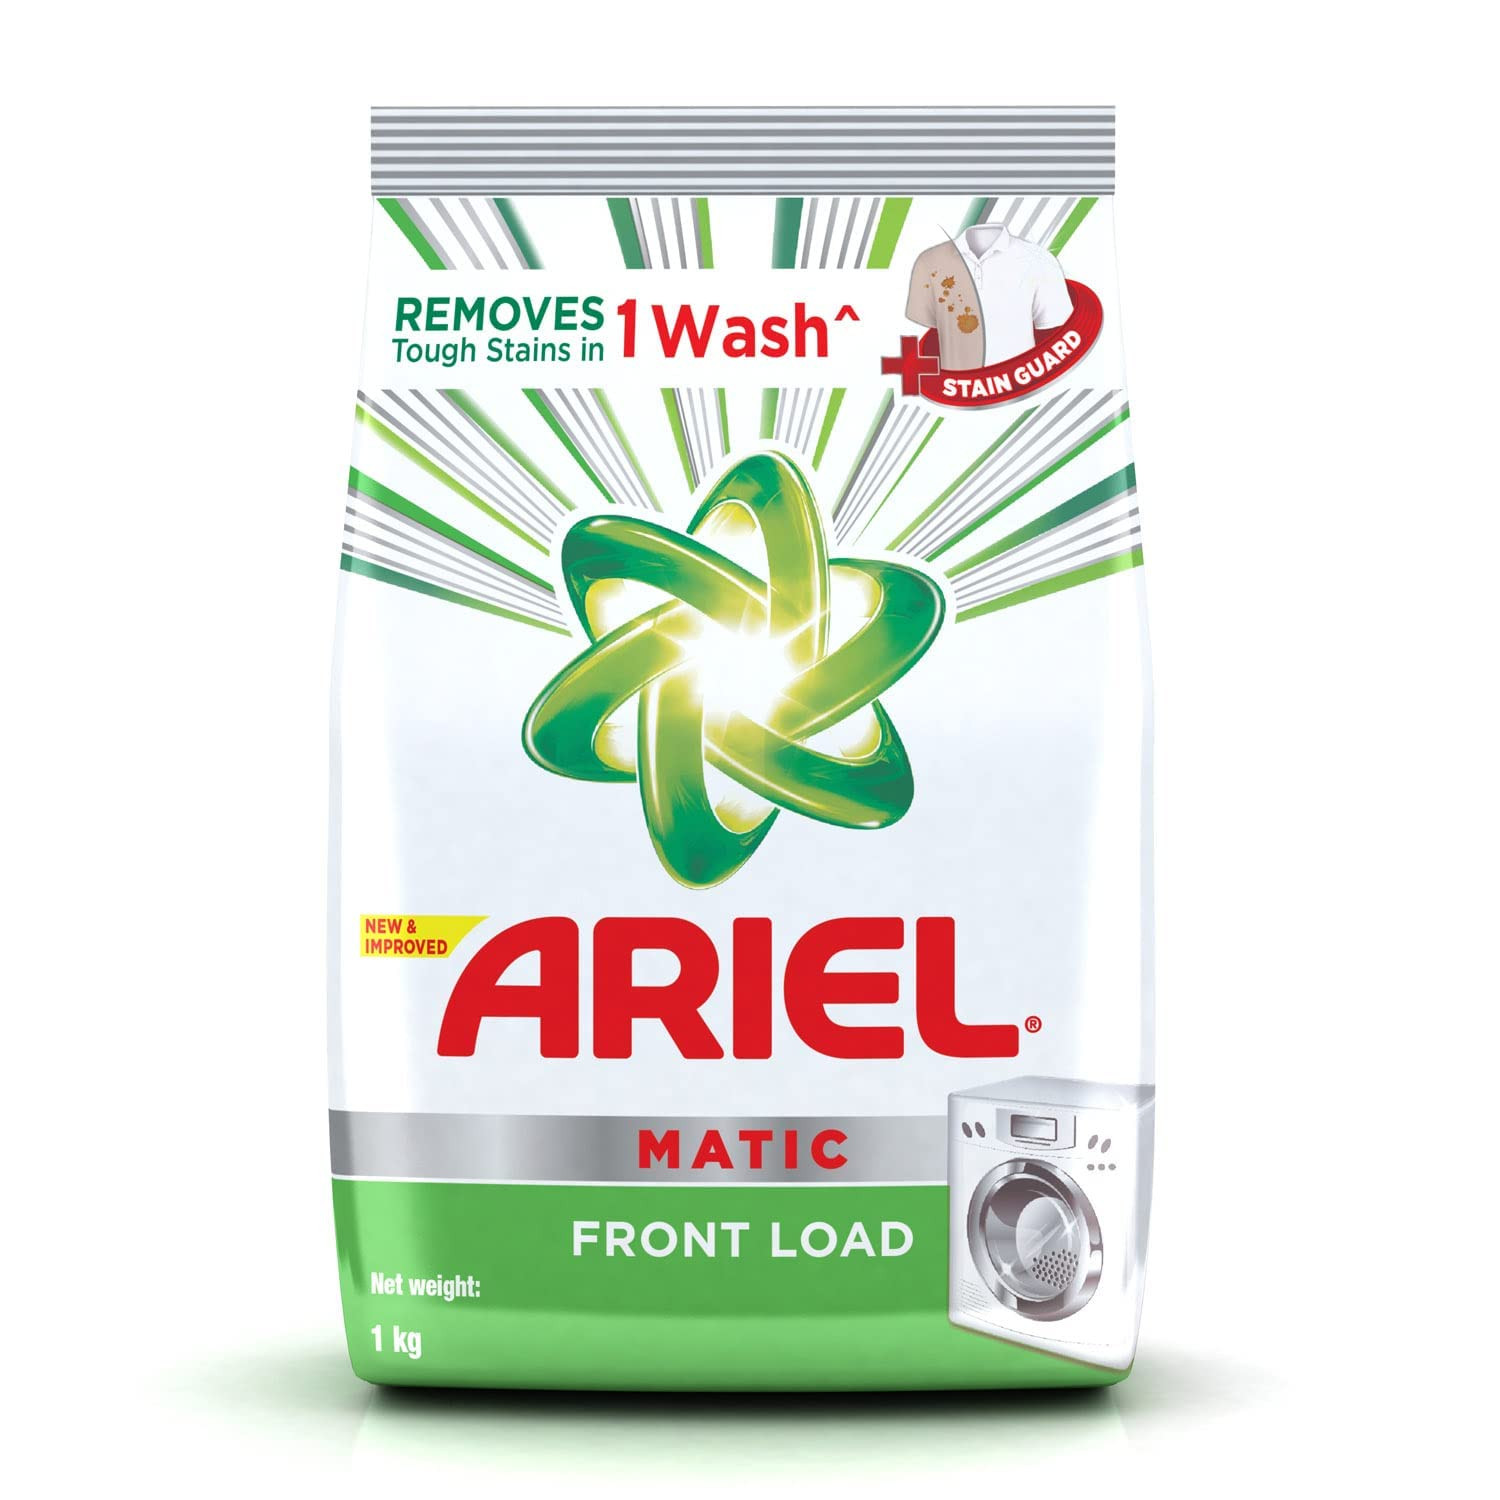 Ariel Matic Front Load Detergent Washing Powder - 1 Kg, 1 Count